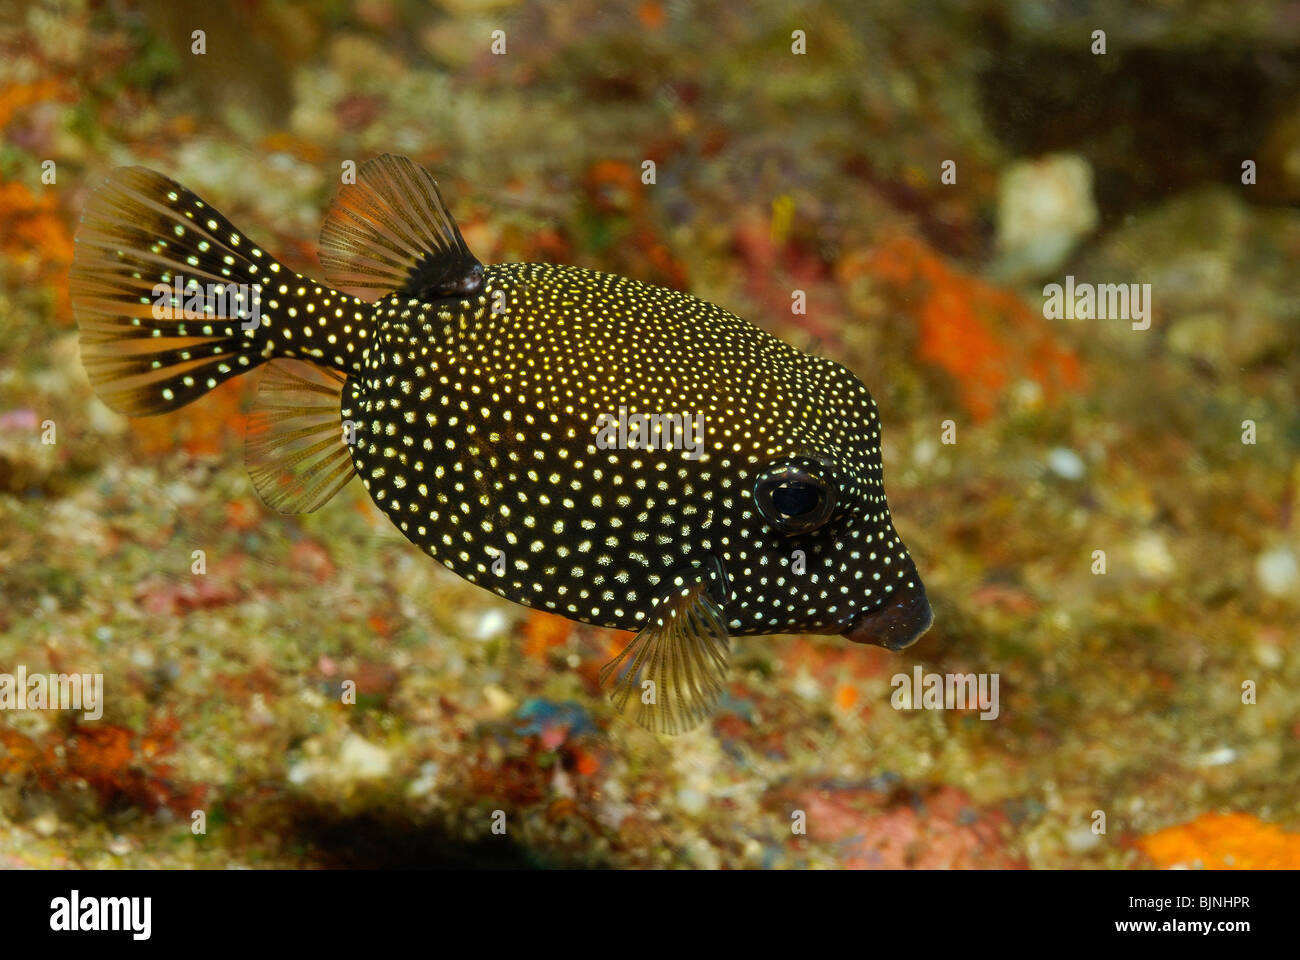 Spotted boxfish in the Similan Islands, Andaman Sea Stock Photo